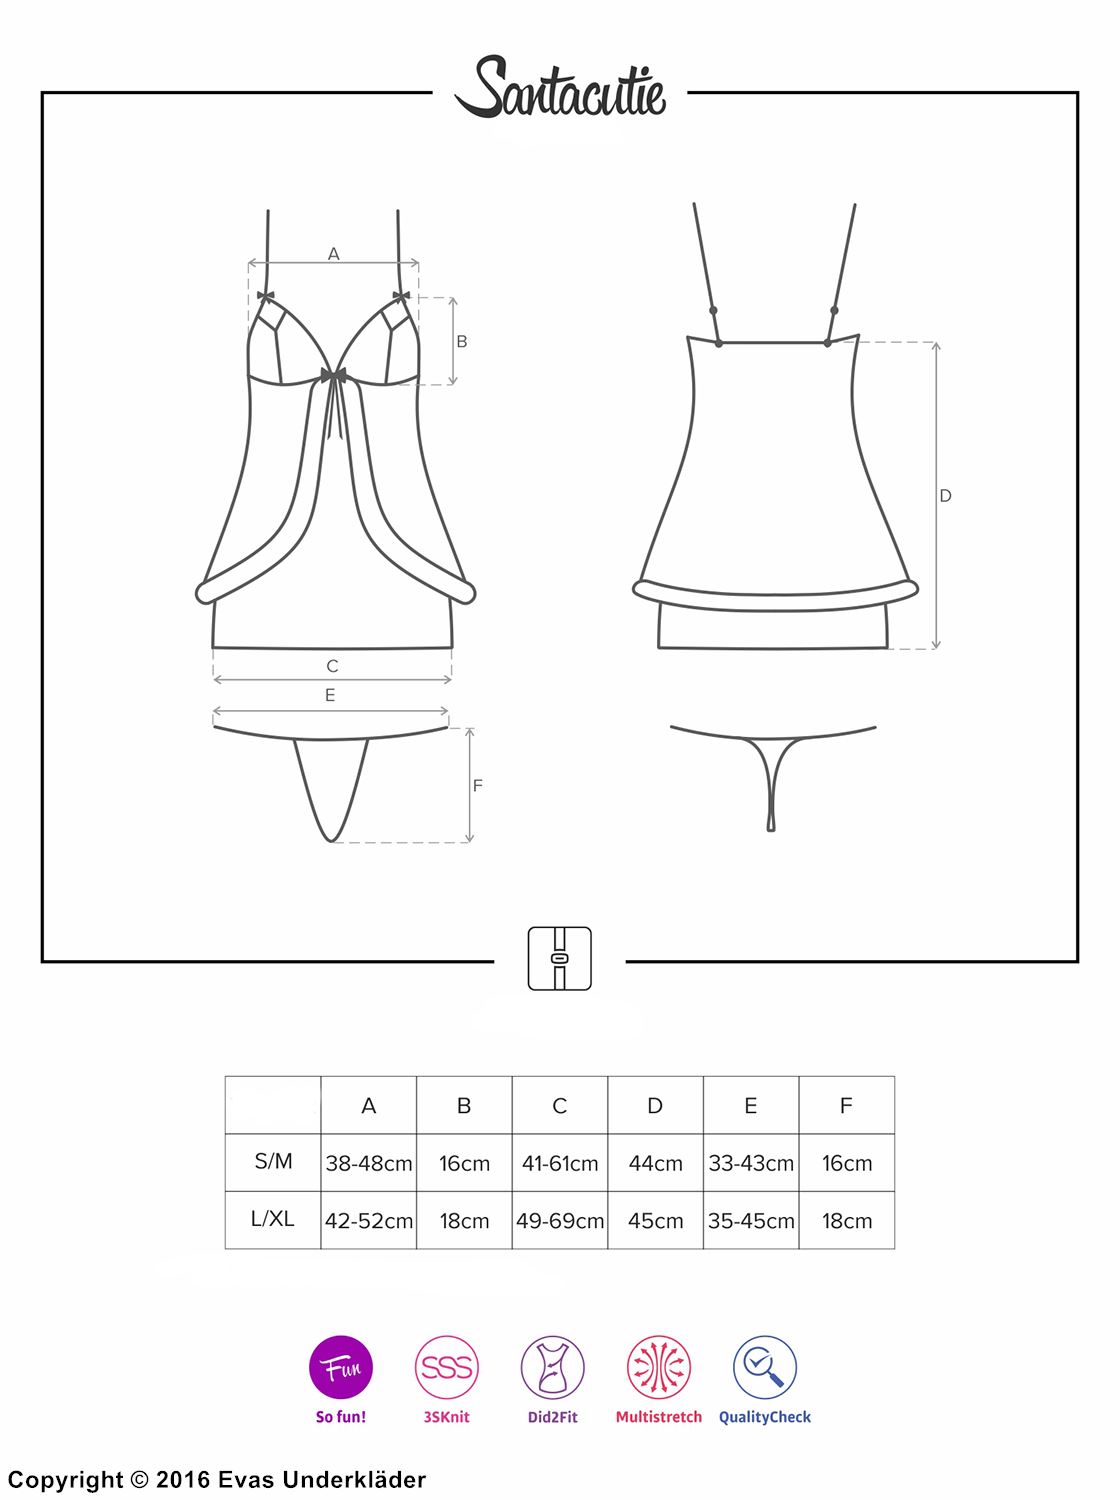 Chistmas lingerie / costume